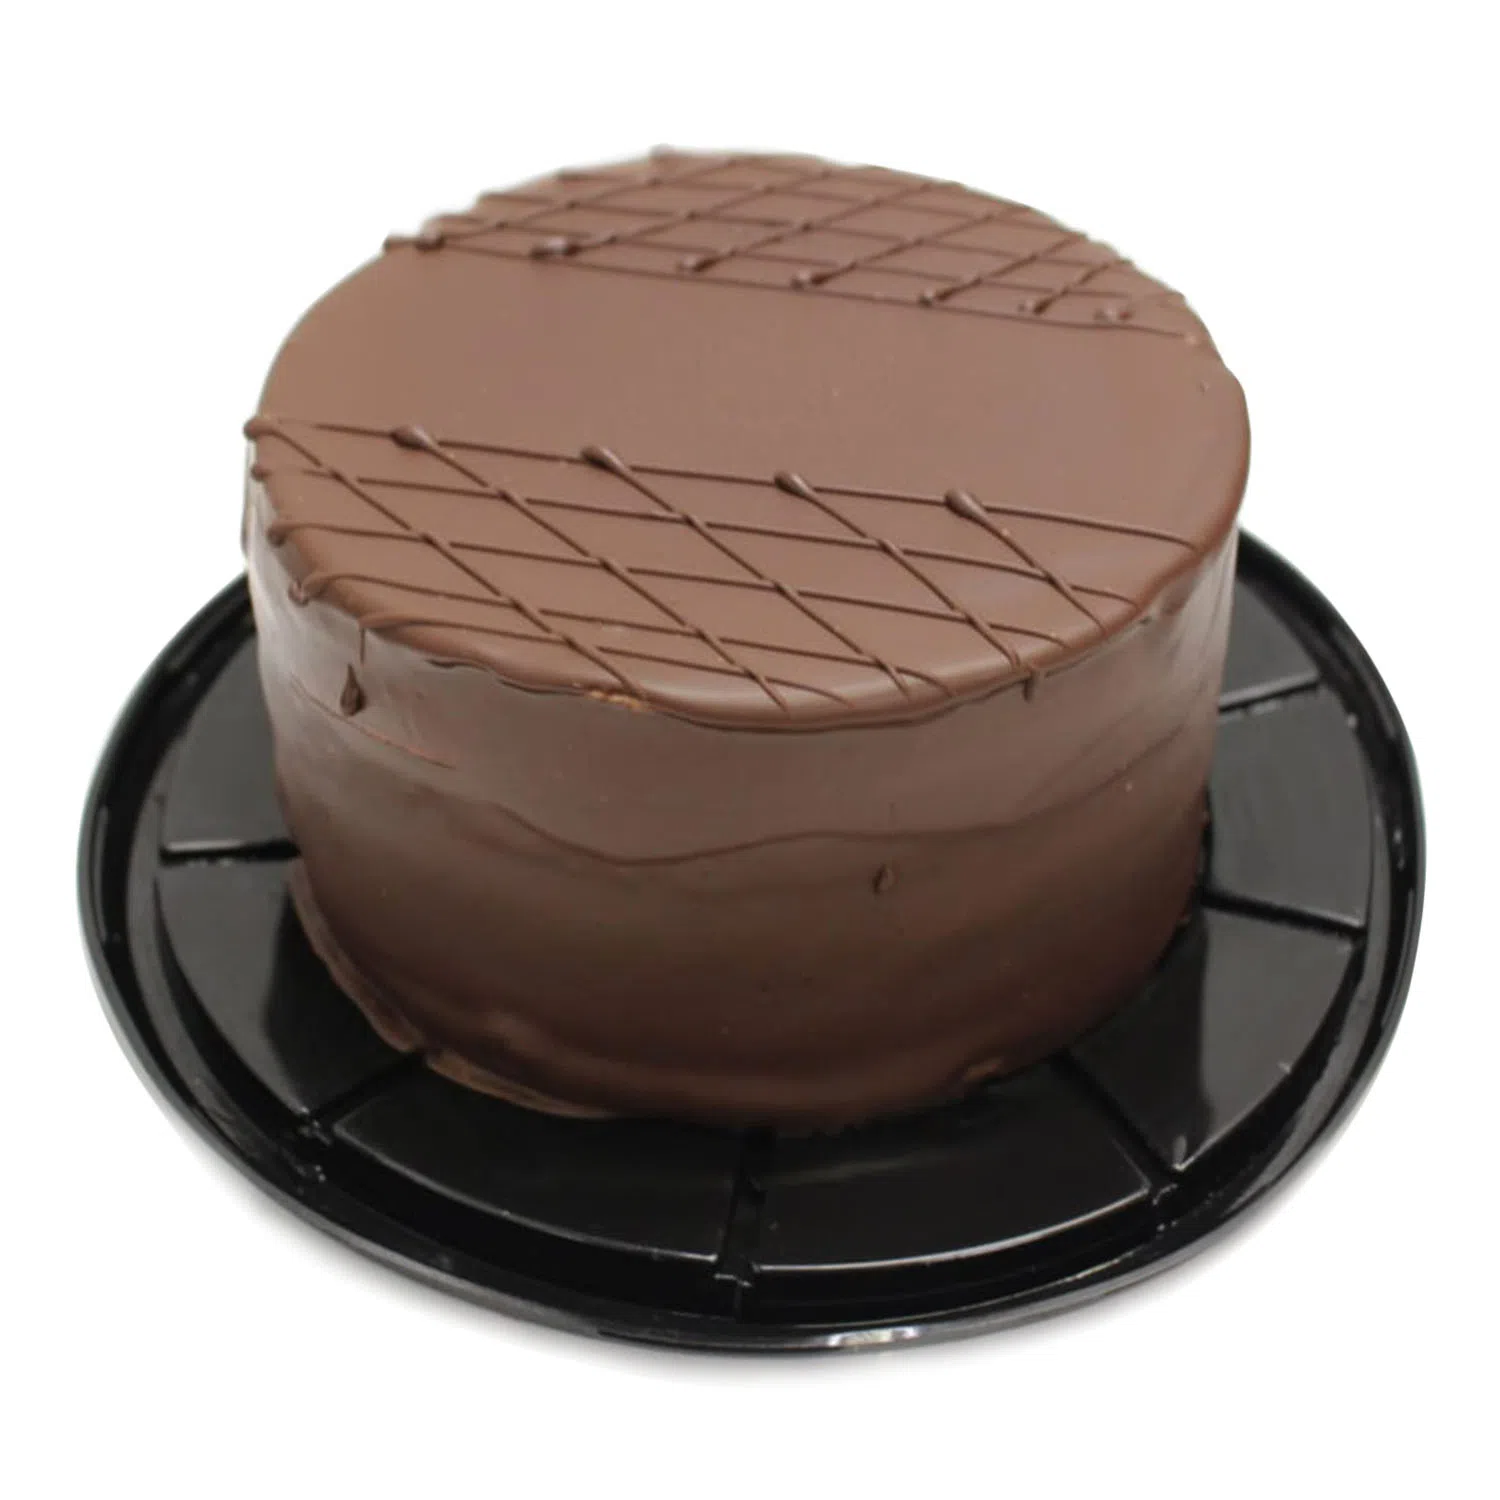  Torta Panqueque de Chocolate (10 personas)